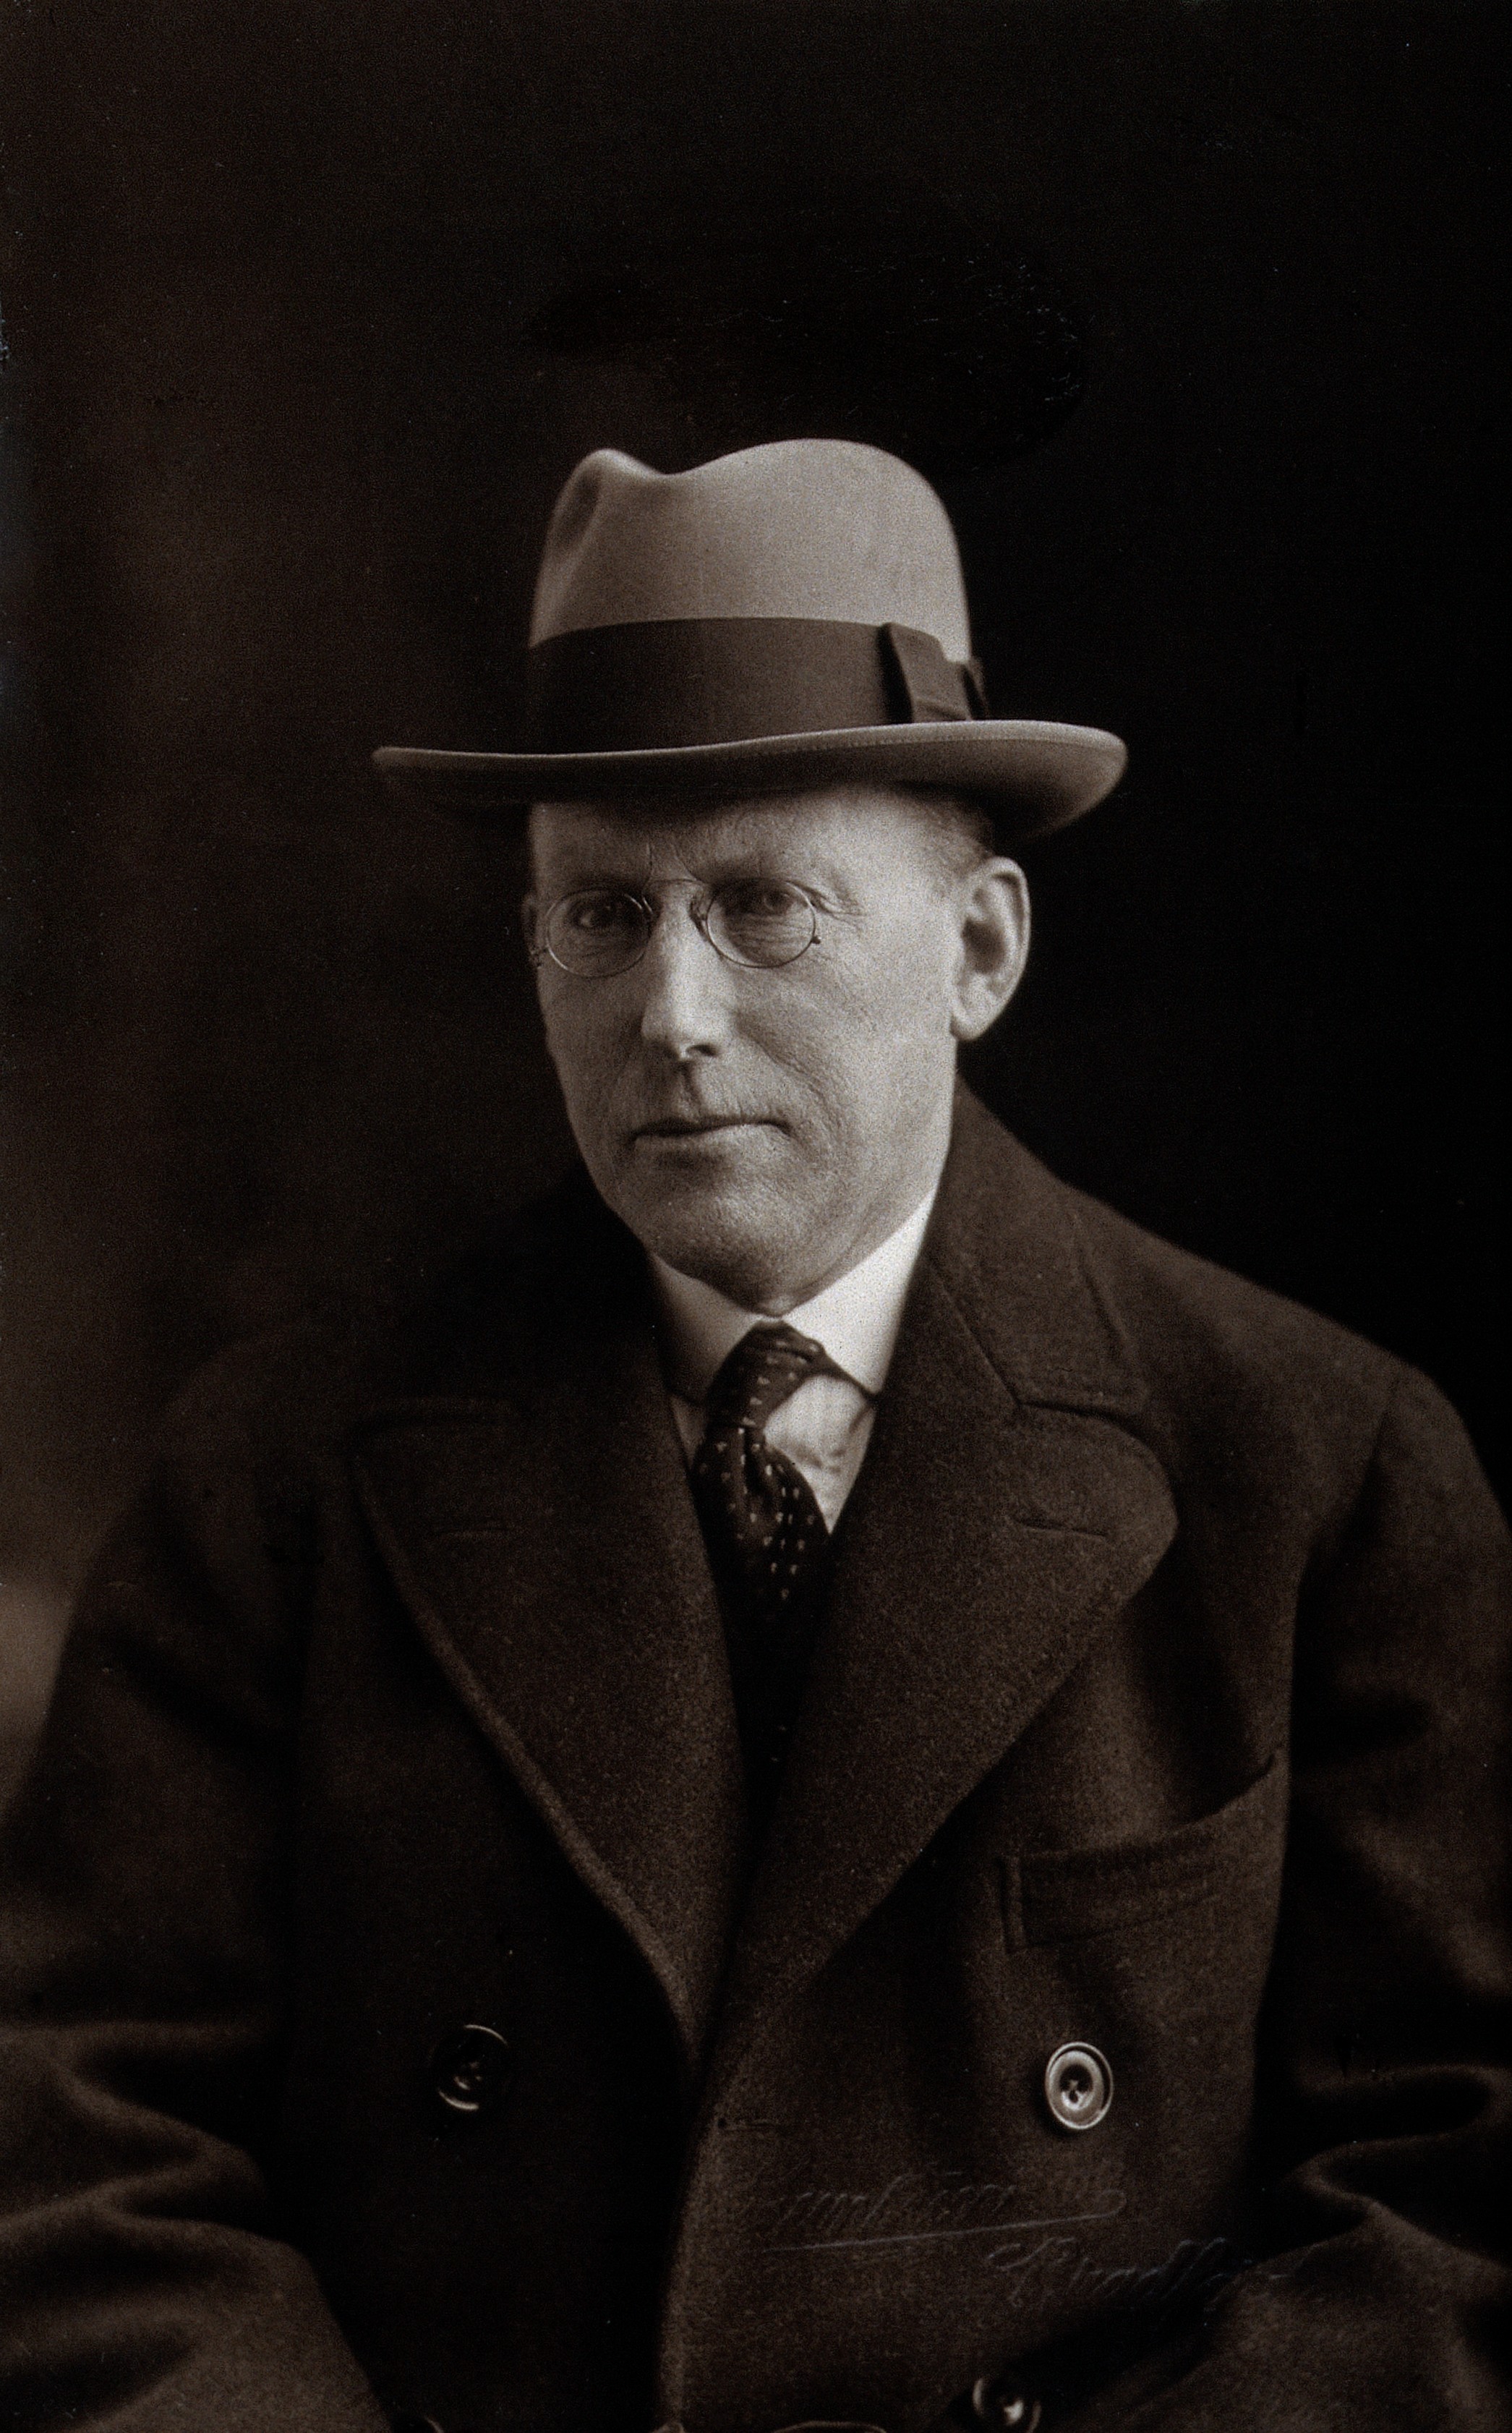 William B. Mitchell. Photograph by Gunston & Co. Wellcome V0026865